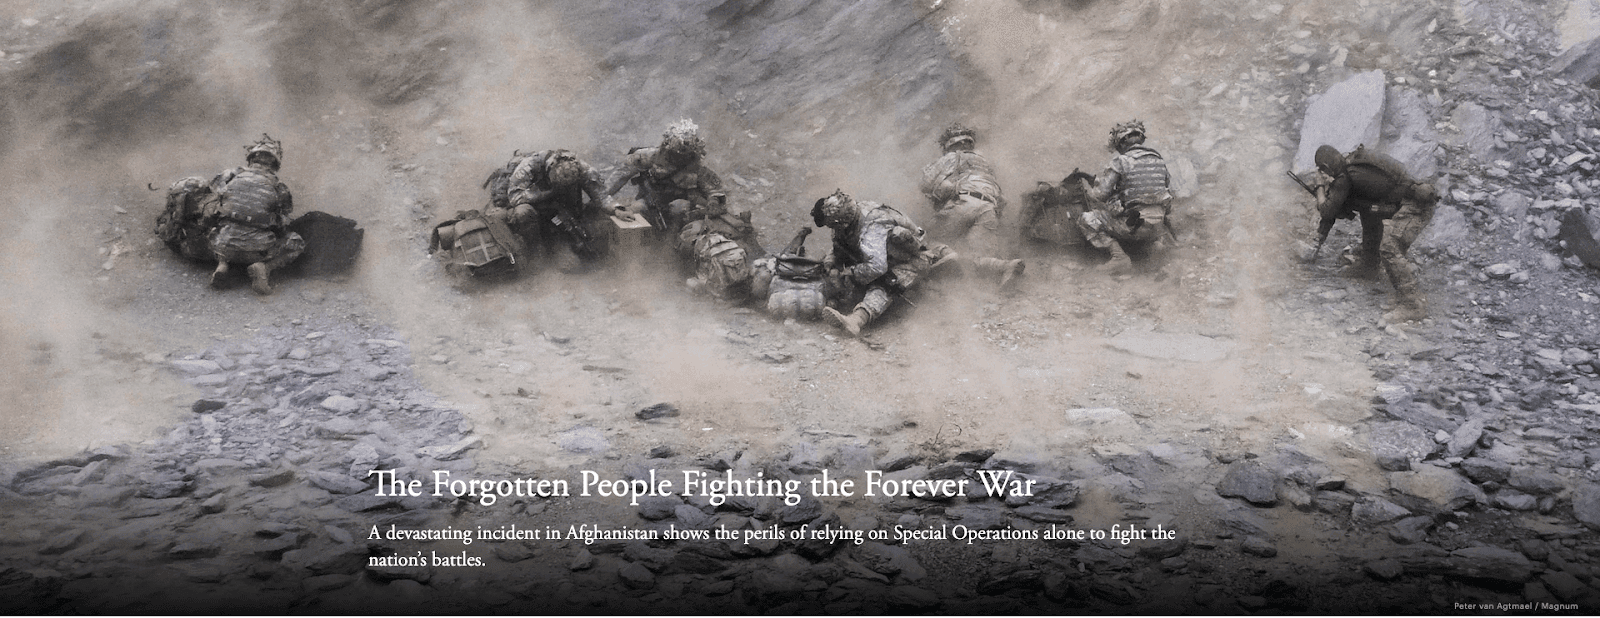 "The Forgotten People Fighting the Forever War" memorable headline